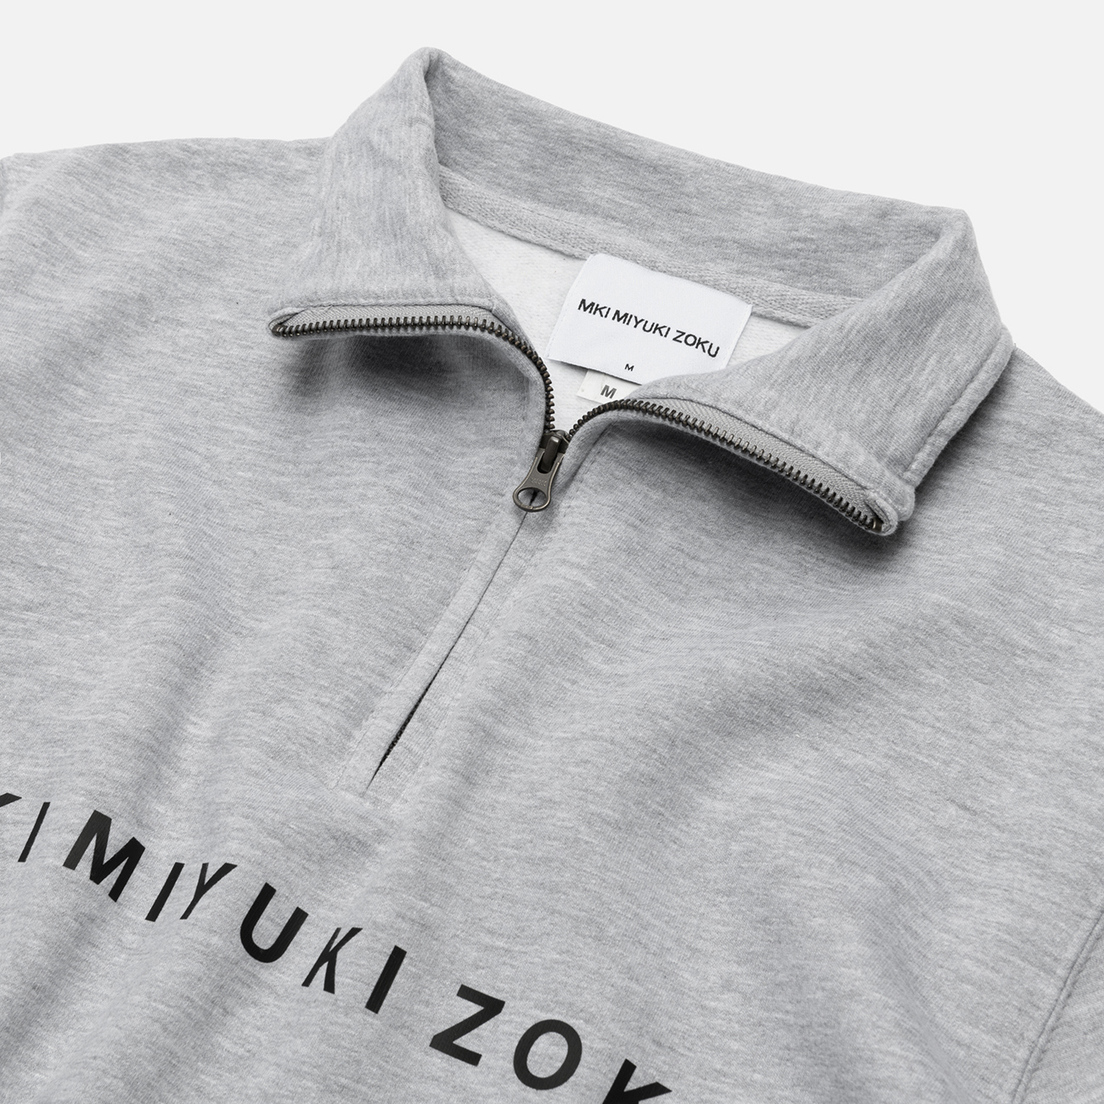 MKI Miyuki-Zoku Мужская толстовка Quarter Zip Sweater